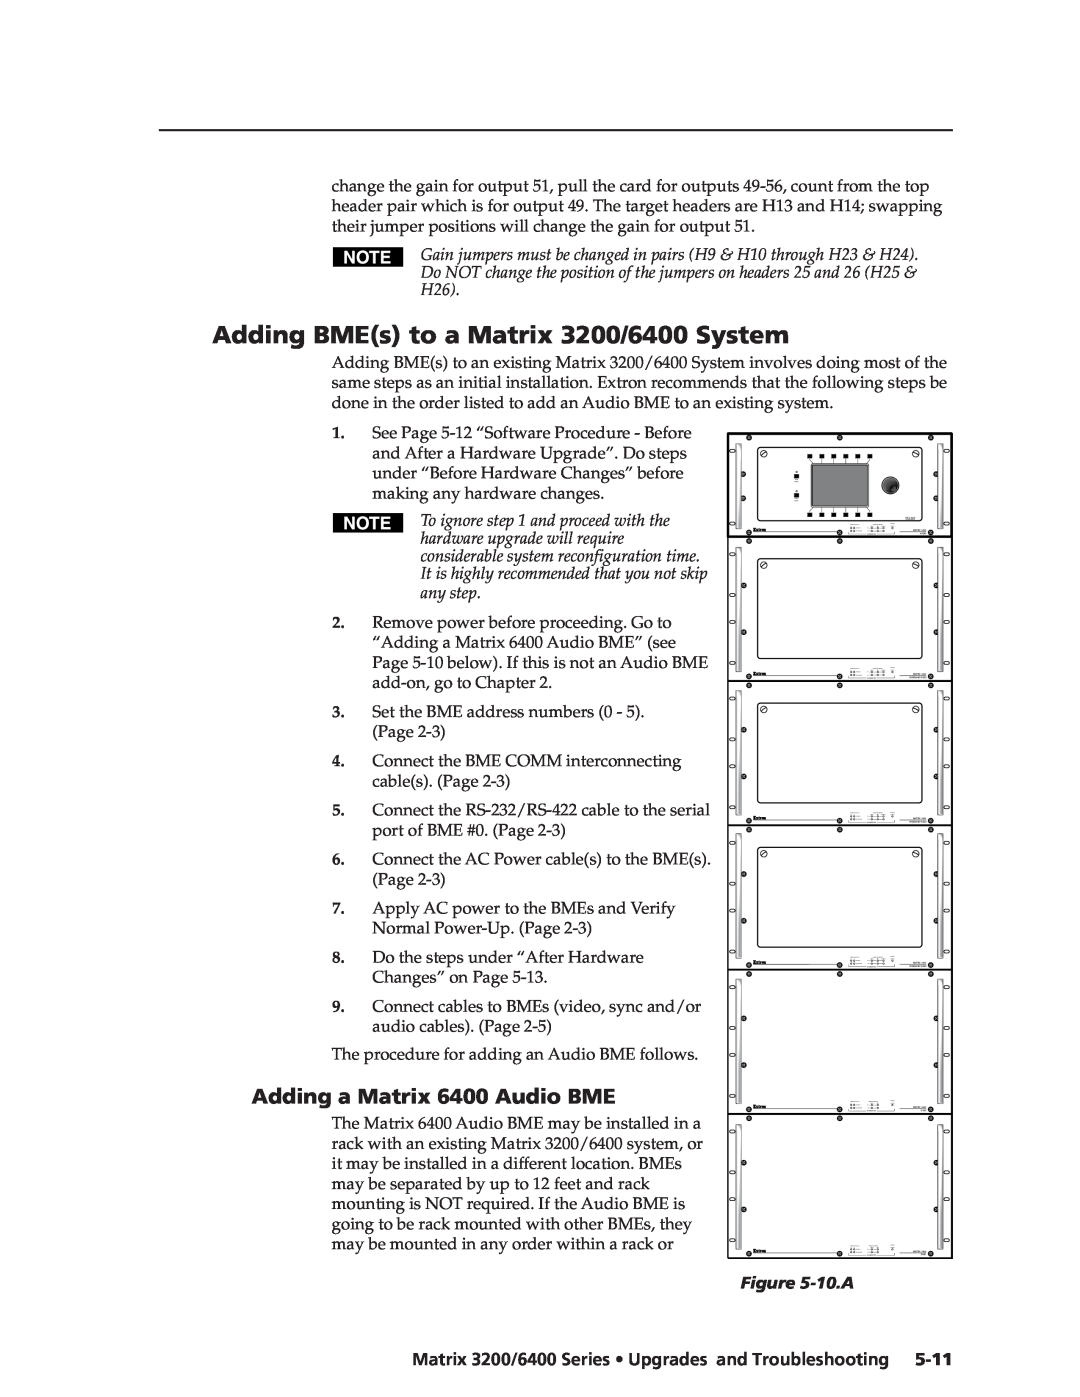 Extron electronic 3200s manual Adding BMEs to a Matrix 3200/6400 System, Adding a Matrix 6400 Audio BME, 10.A 